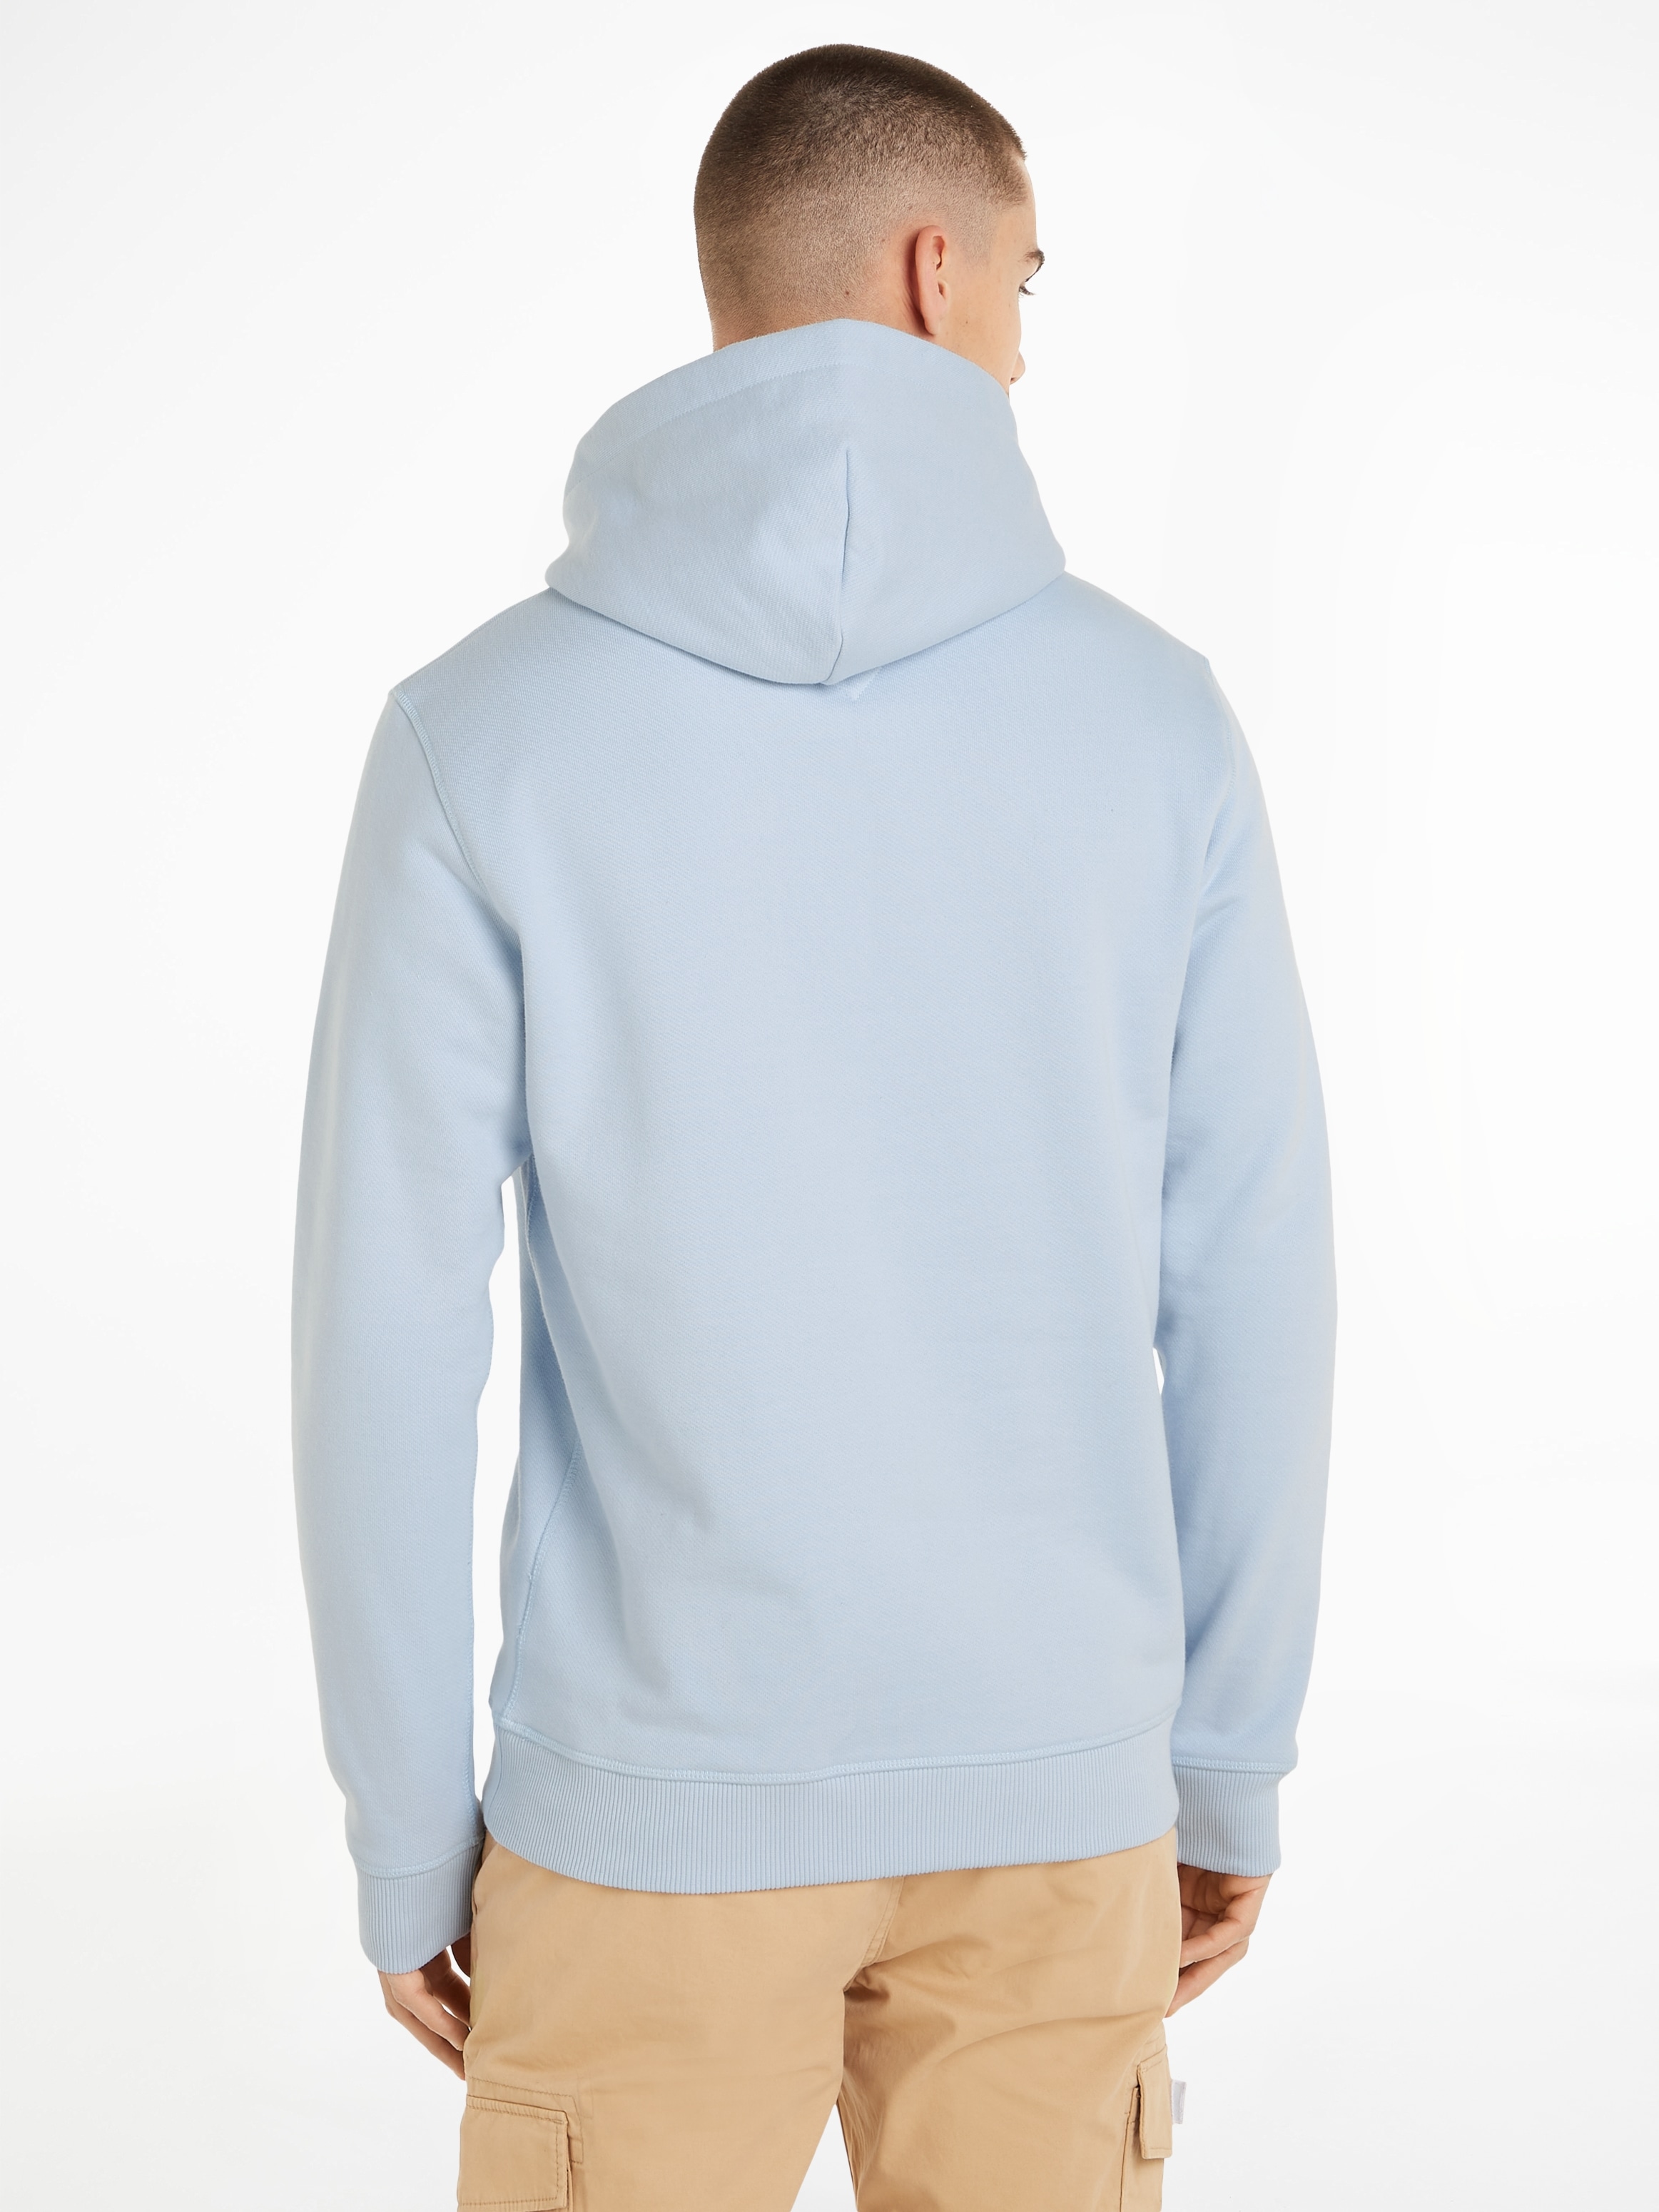 Tommy Jeans Kapuzensweatshirt »TJM REG BOLD CLASSICS HOODIE EXT«, mit Logodruck auf der Brust